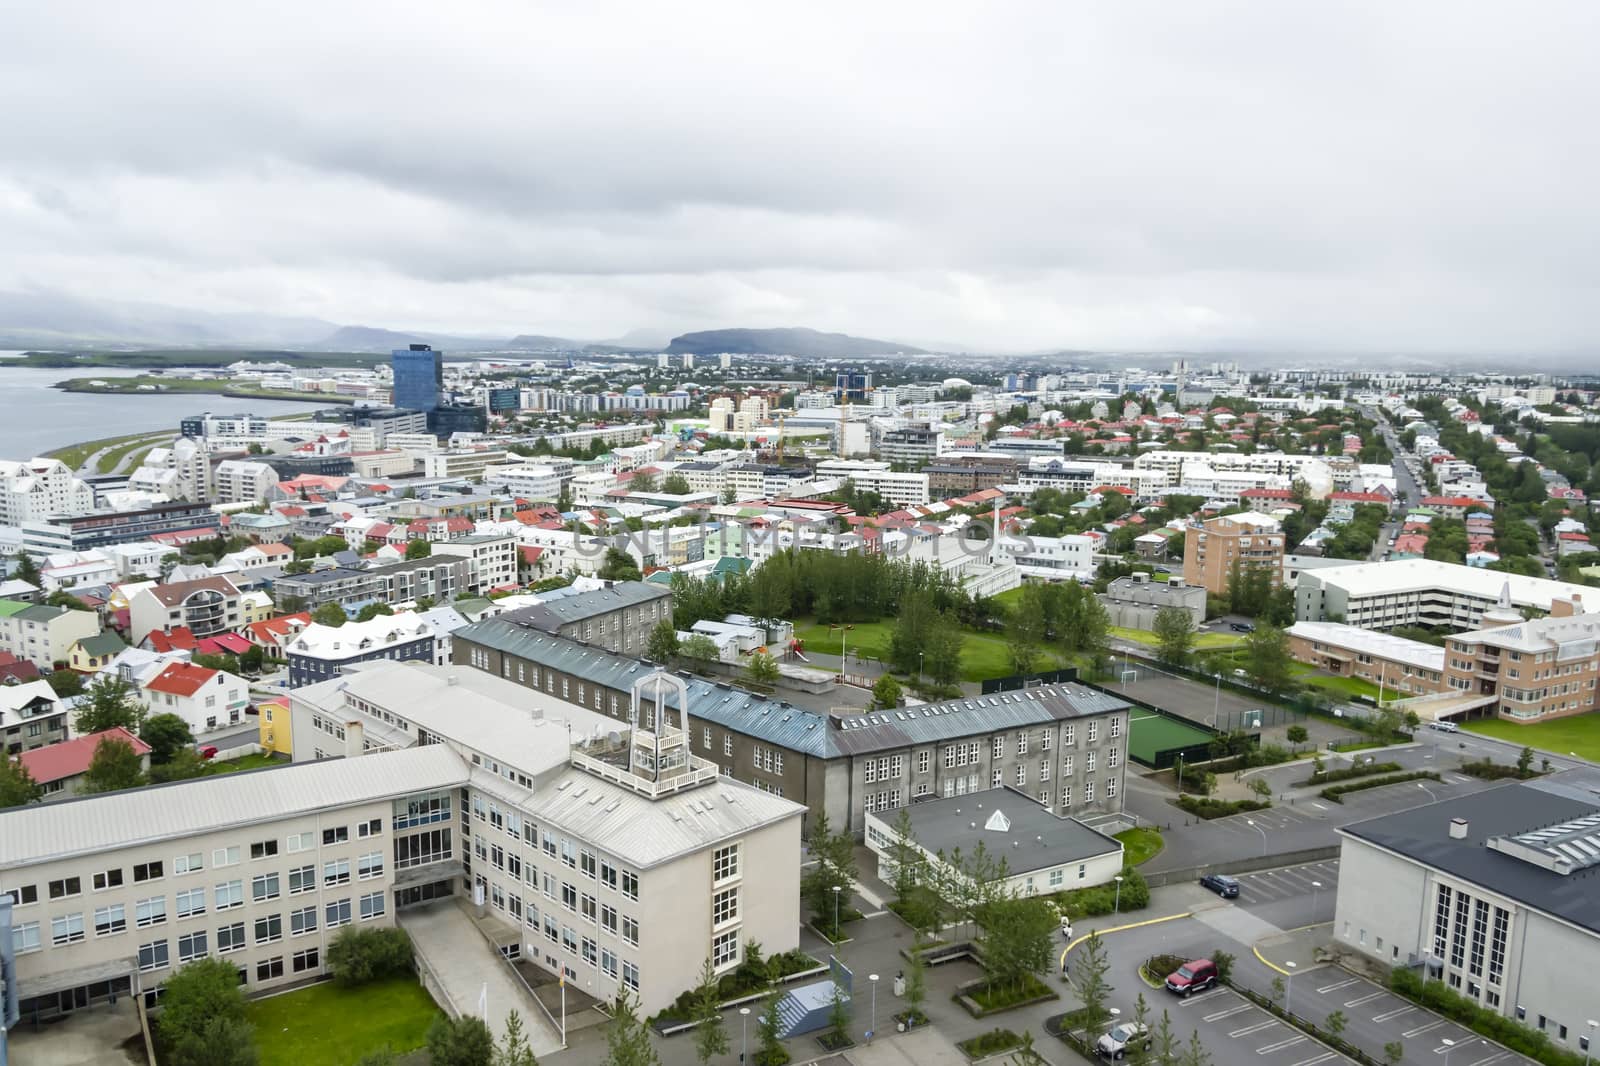 Downtown Reykjavik, Iceland